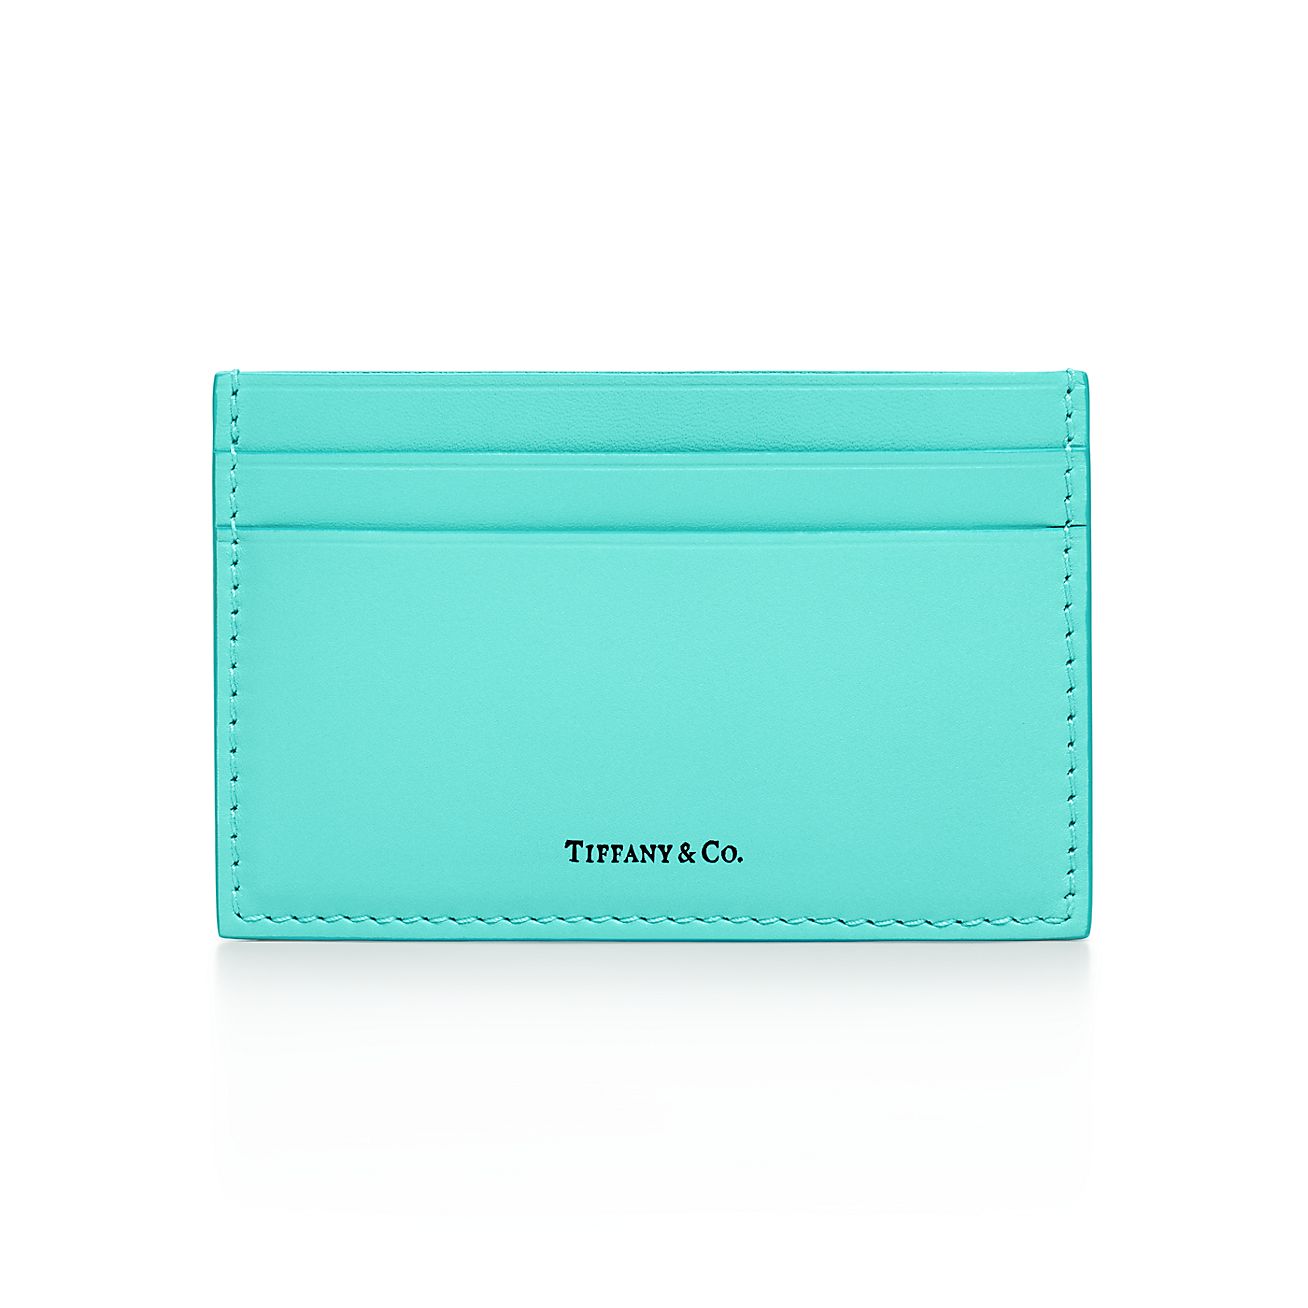 tiffany & co wallet